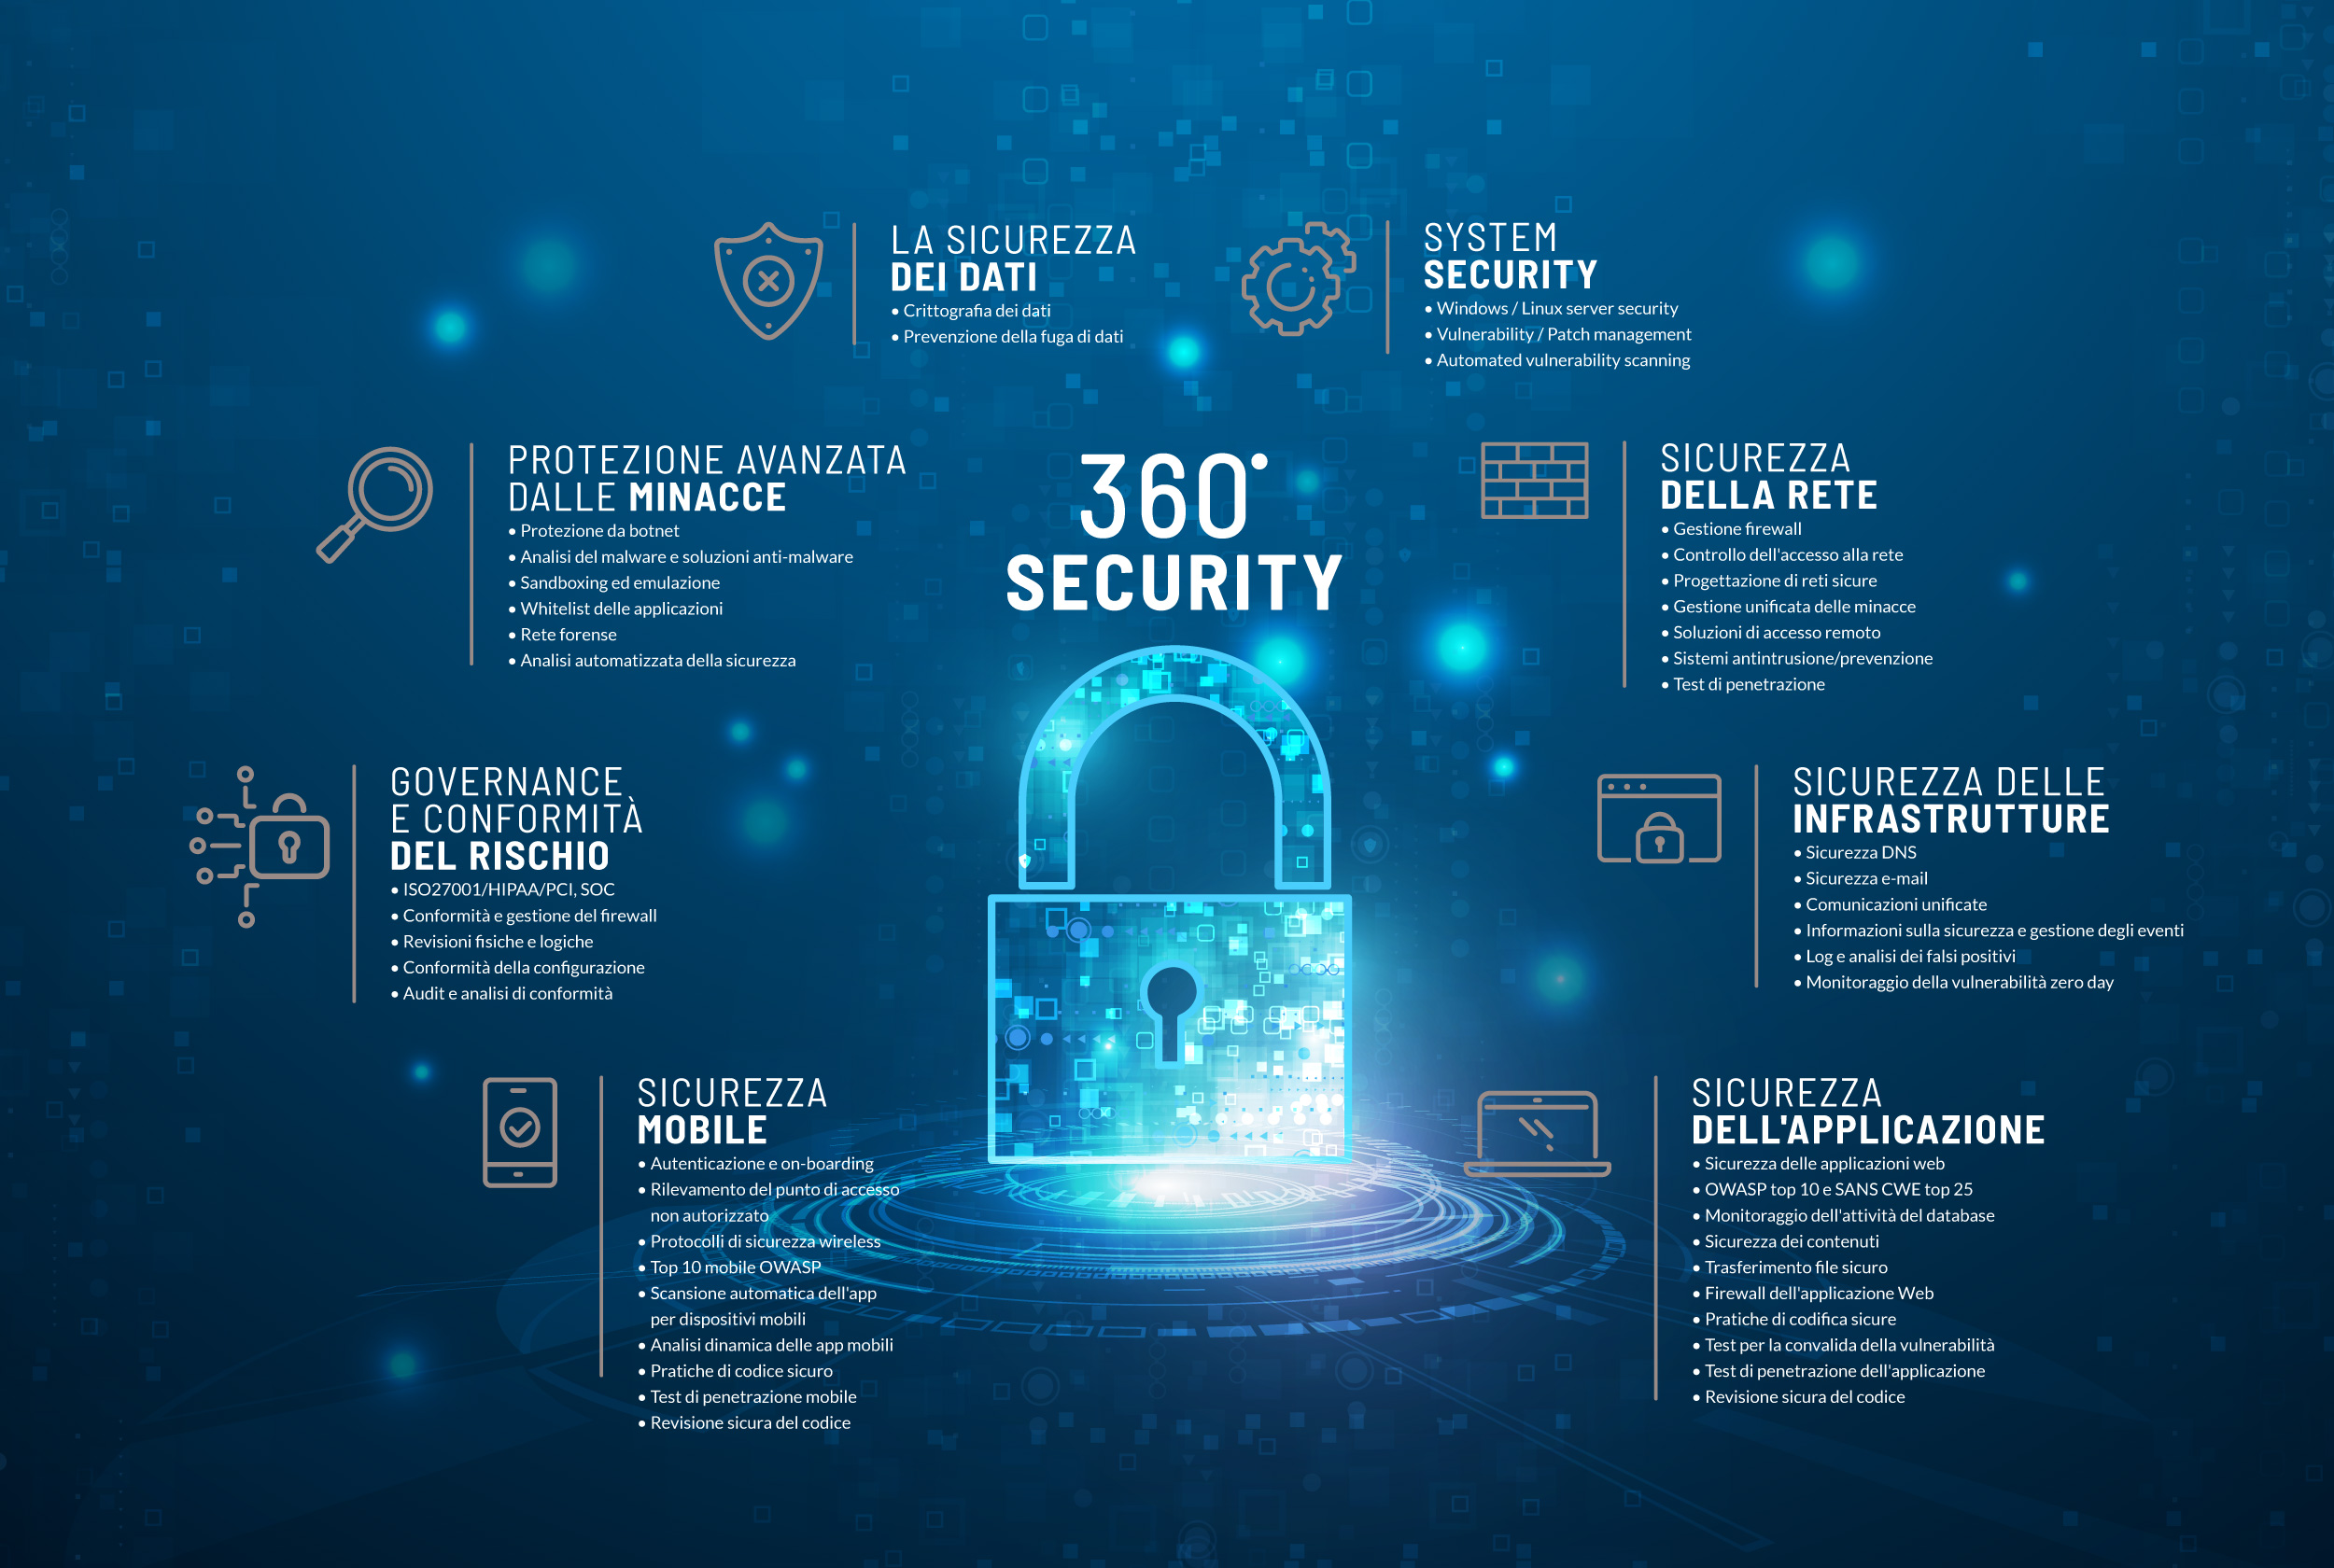 Security360